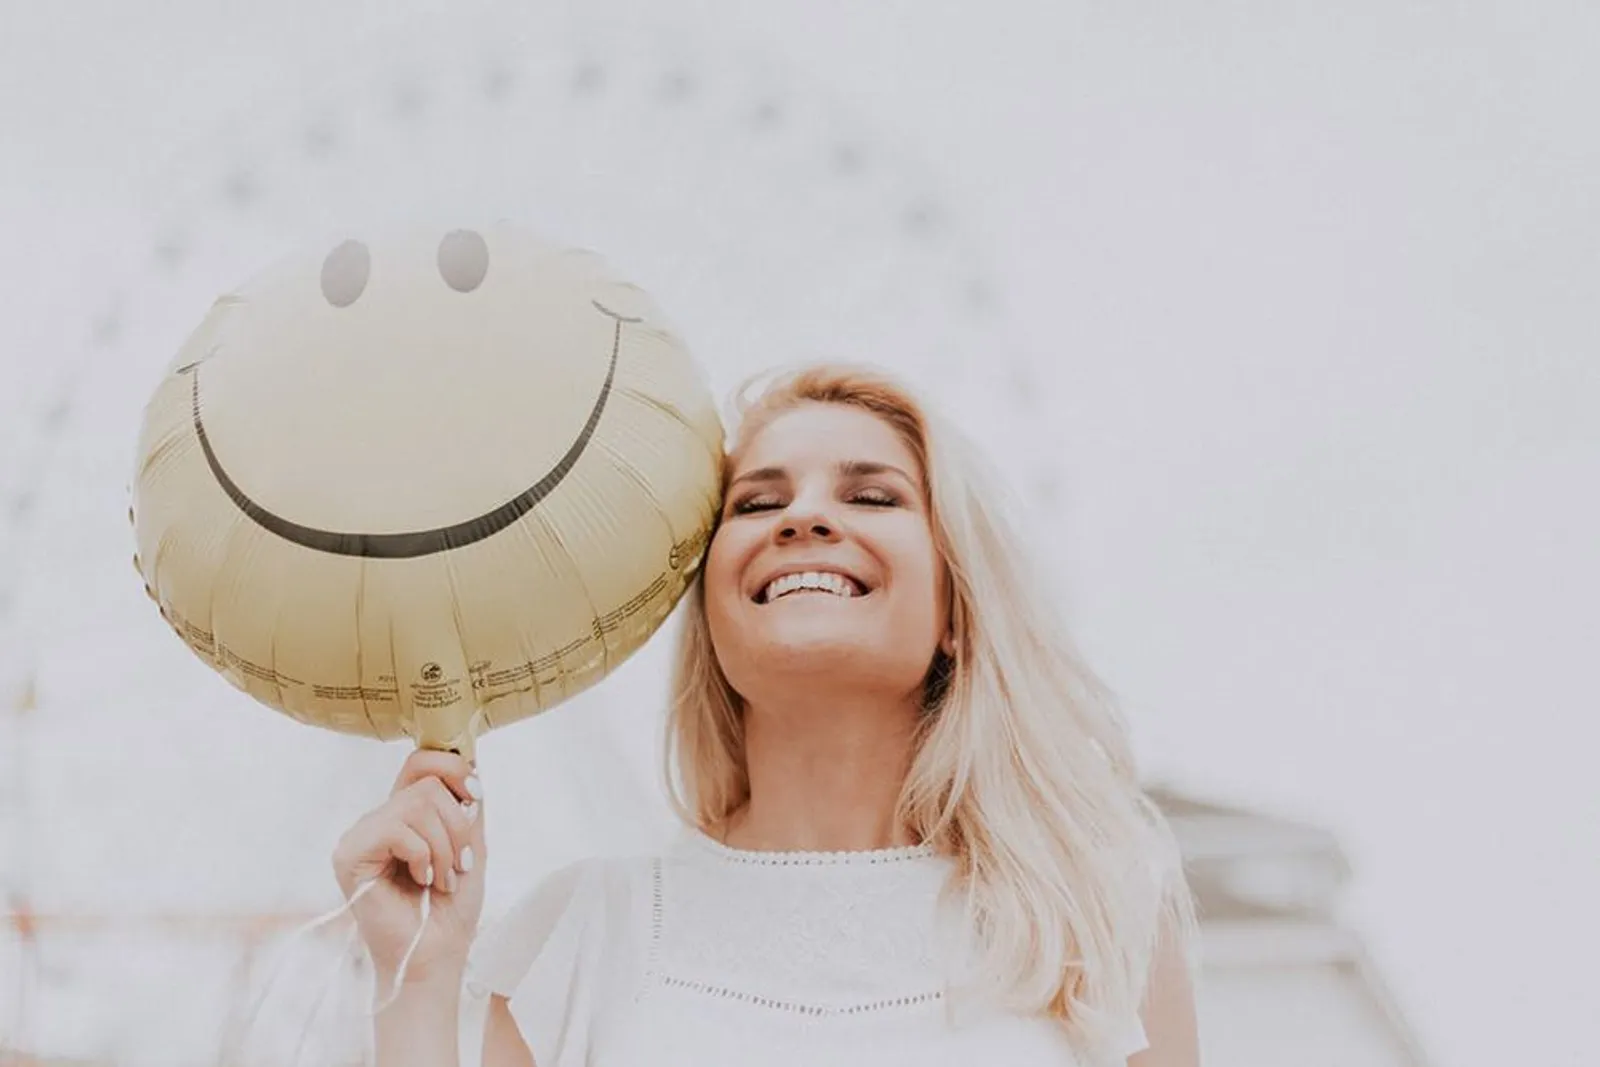 Orang yang Murah Senyum Bukan Berarti Bahagia, Ini 7 Faktanya 